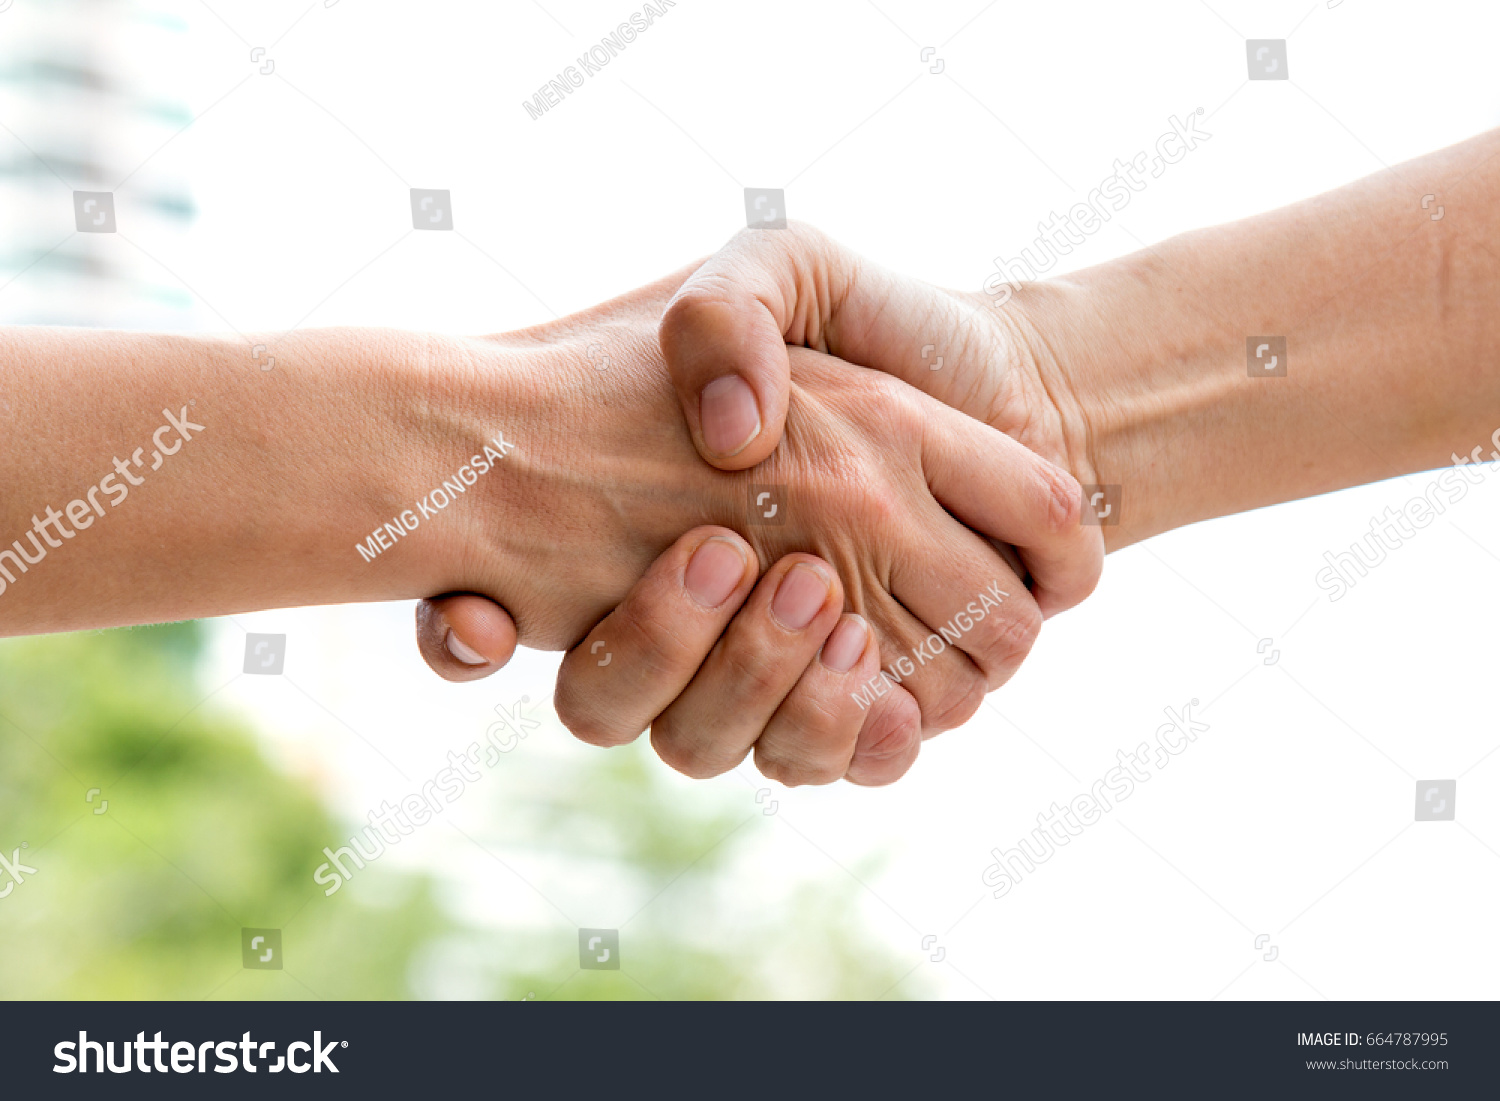 Close up of handshake of business partner after agreement #664787995